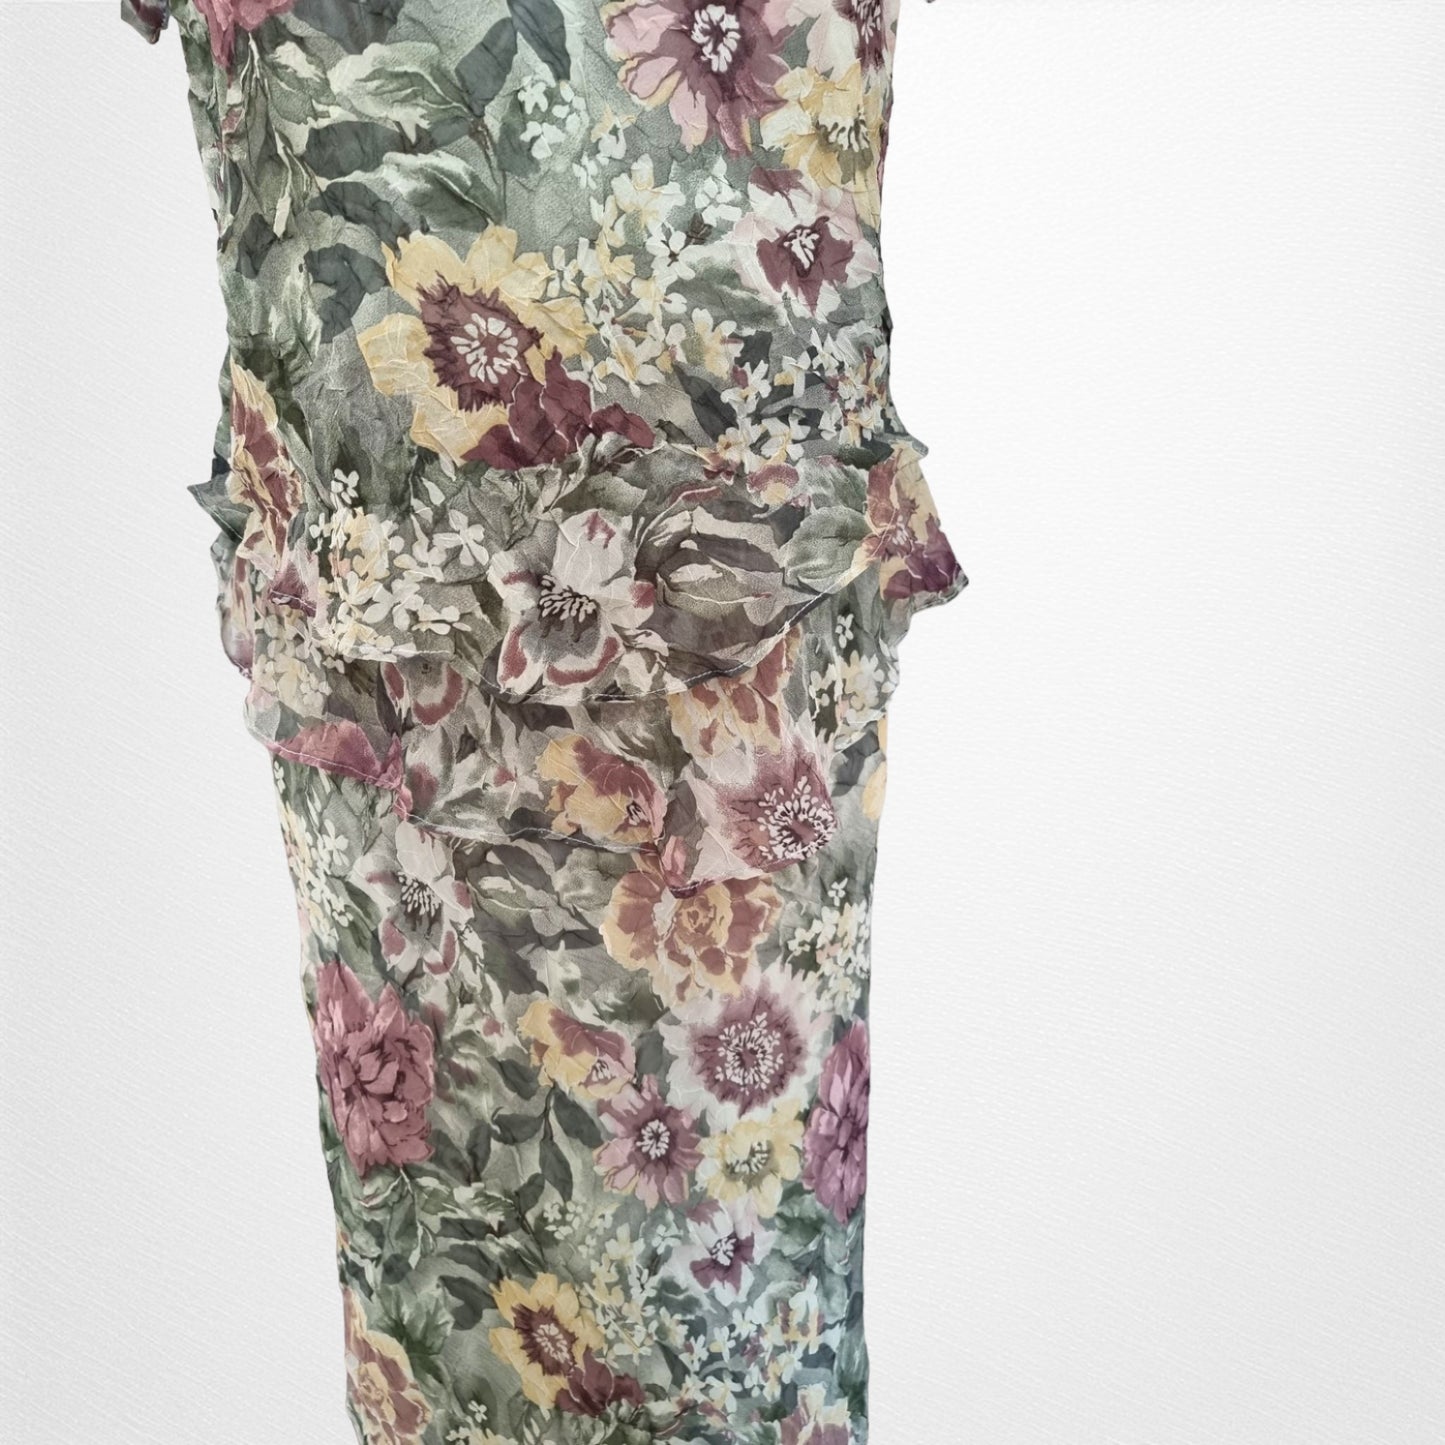 Allyson Whitmore Rare Vintage Boho Style Floral Tiered Maxi Dress UK 16 US 12 EU44 Timeless Fashions